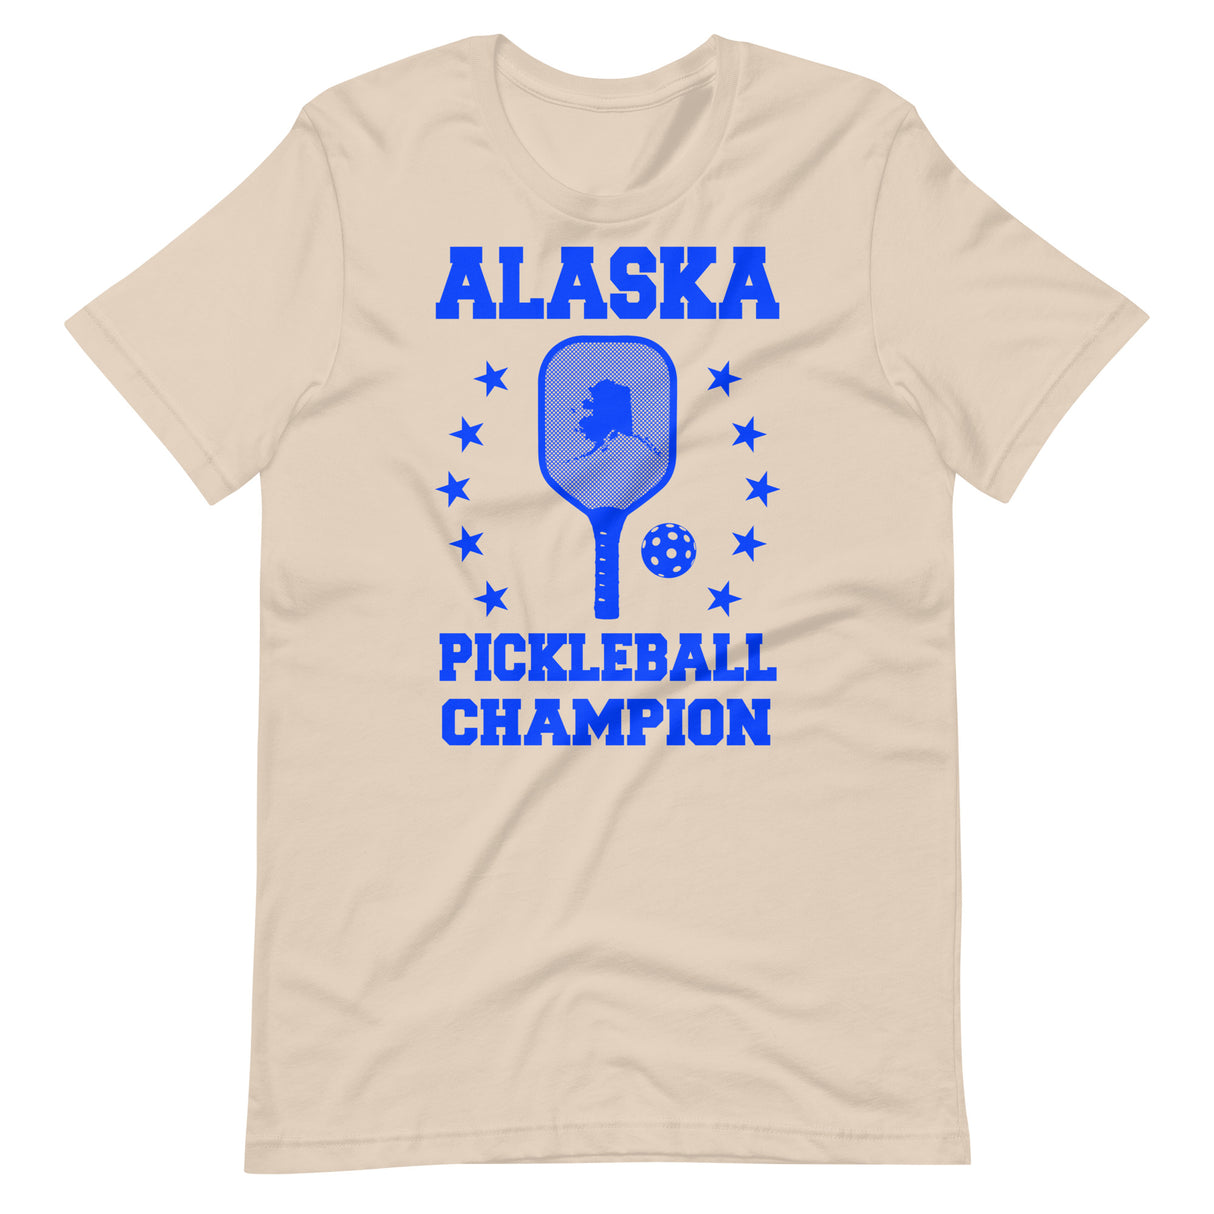 Alaska Pickleball Champion Shirt